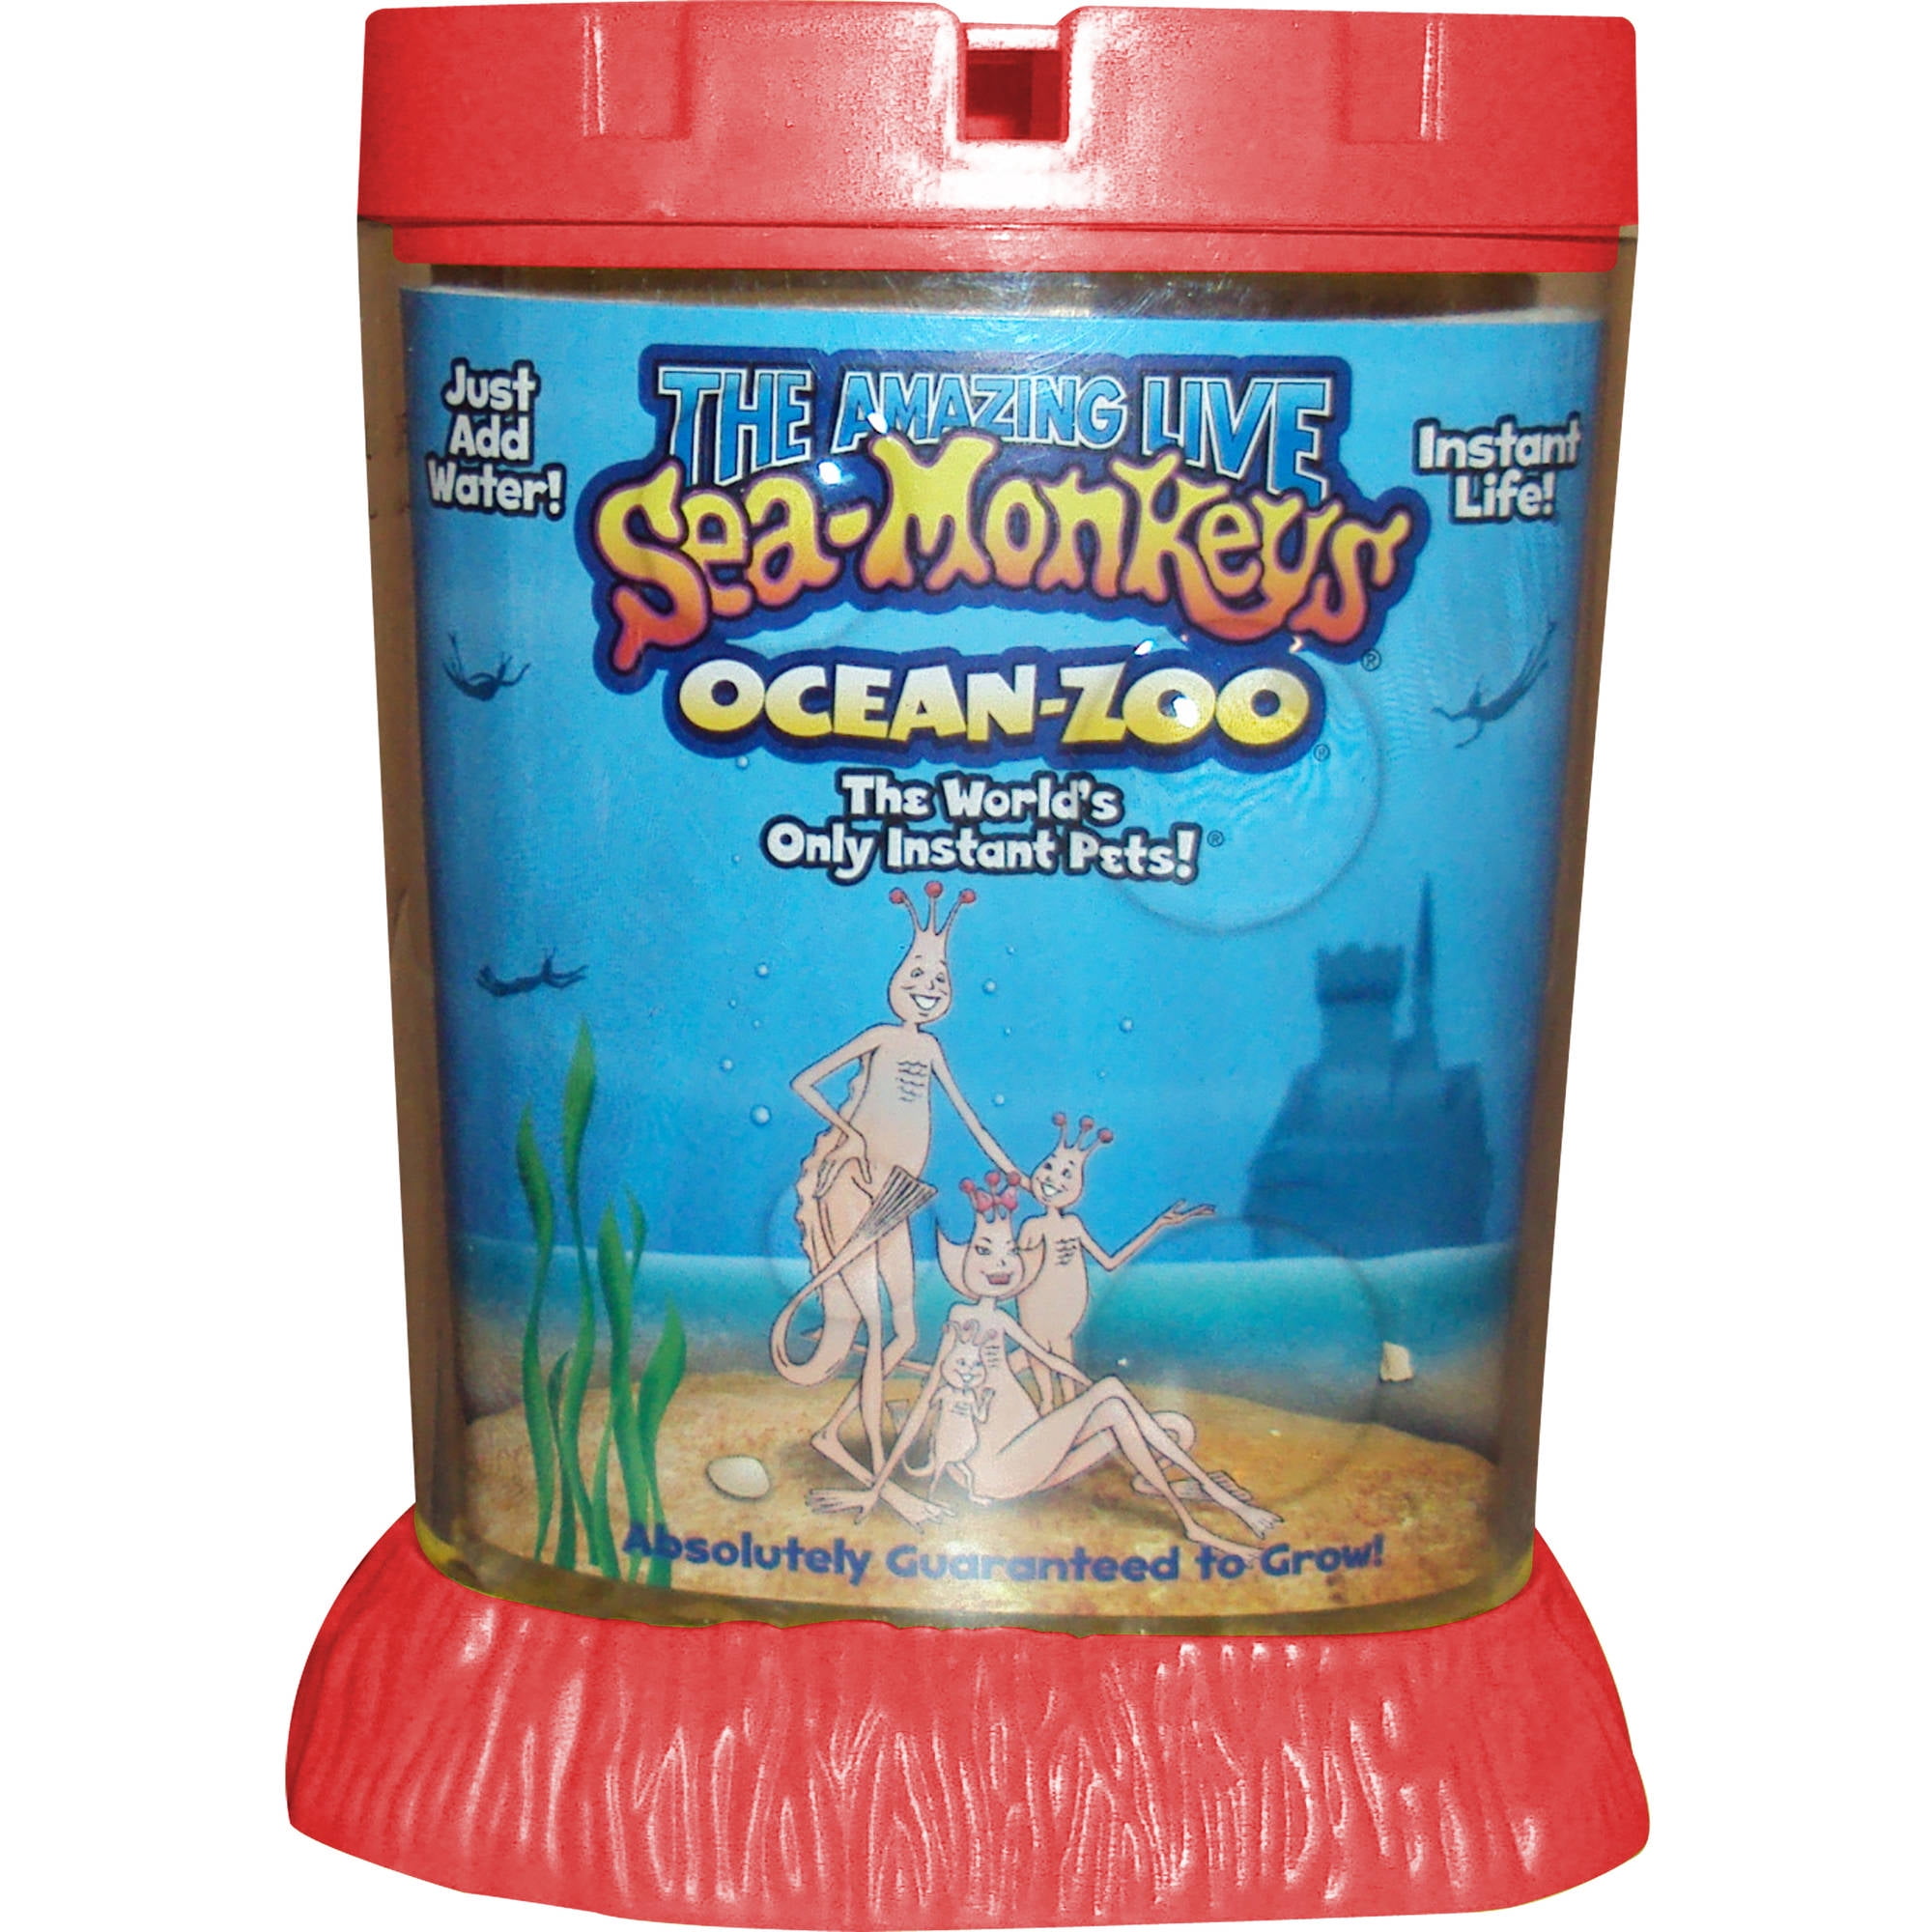 Aquarium Marine Sea Monkeys Live Ocean Monkey Tank Toy Habitat New Aquarium U4R0